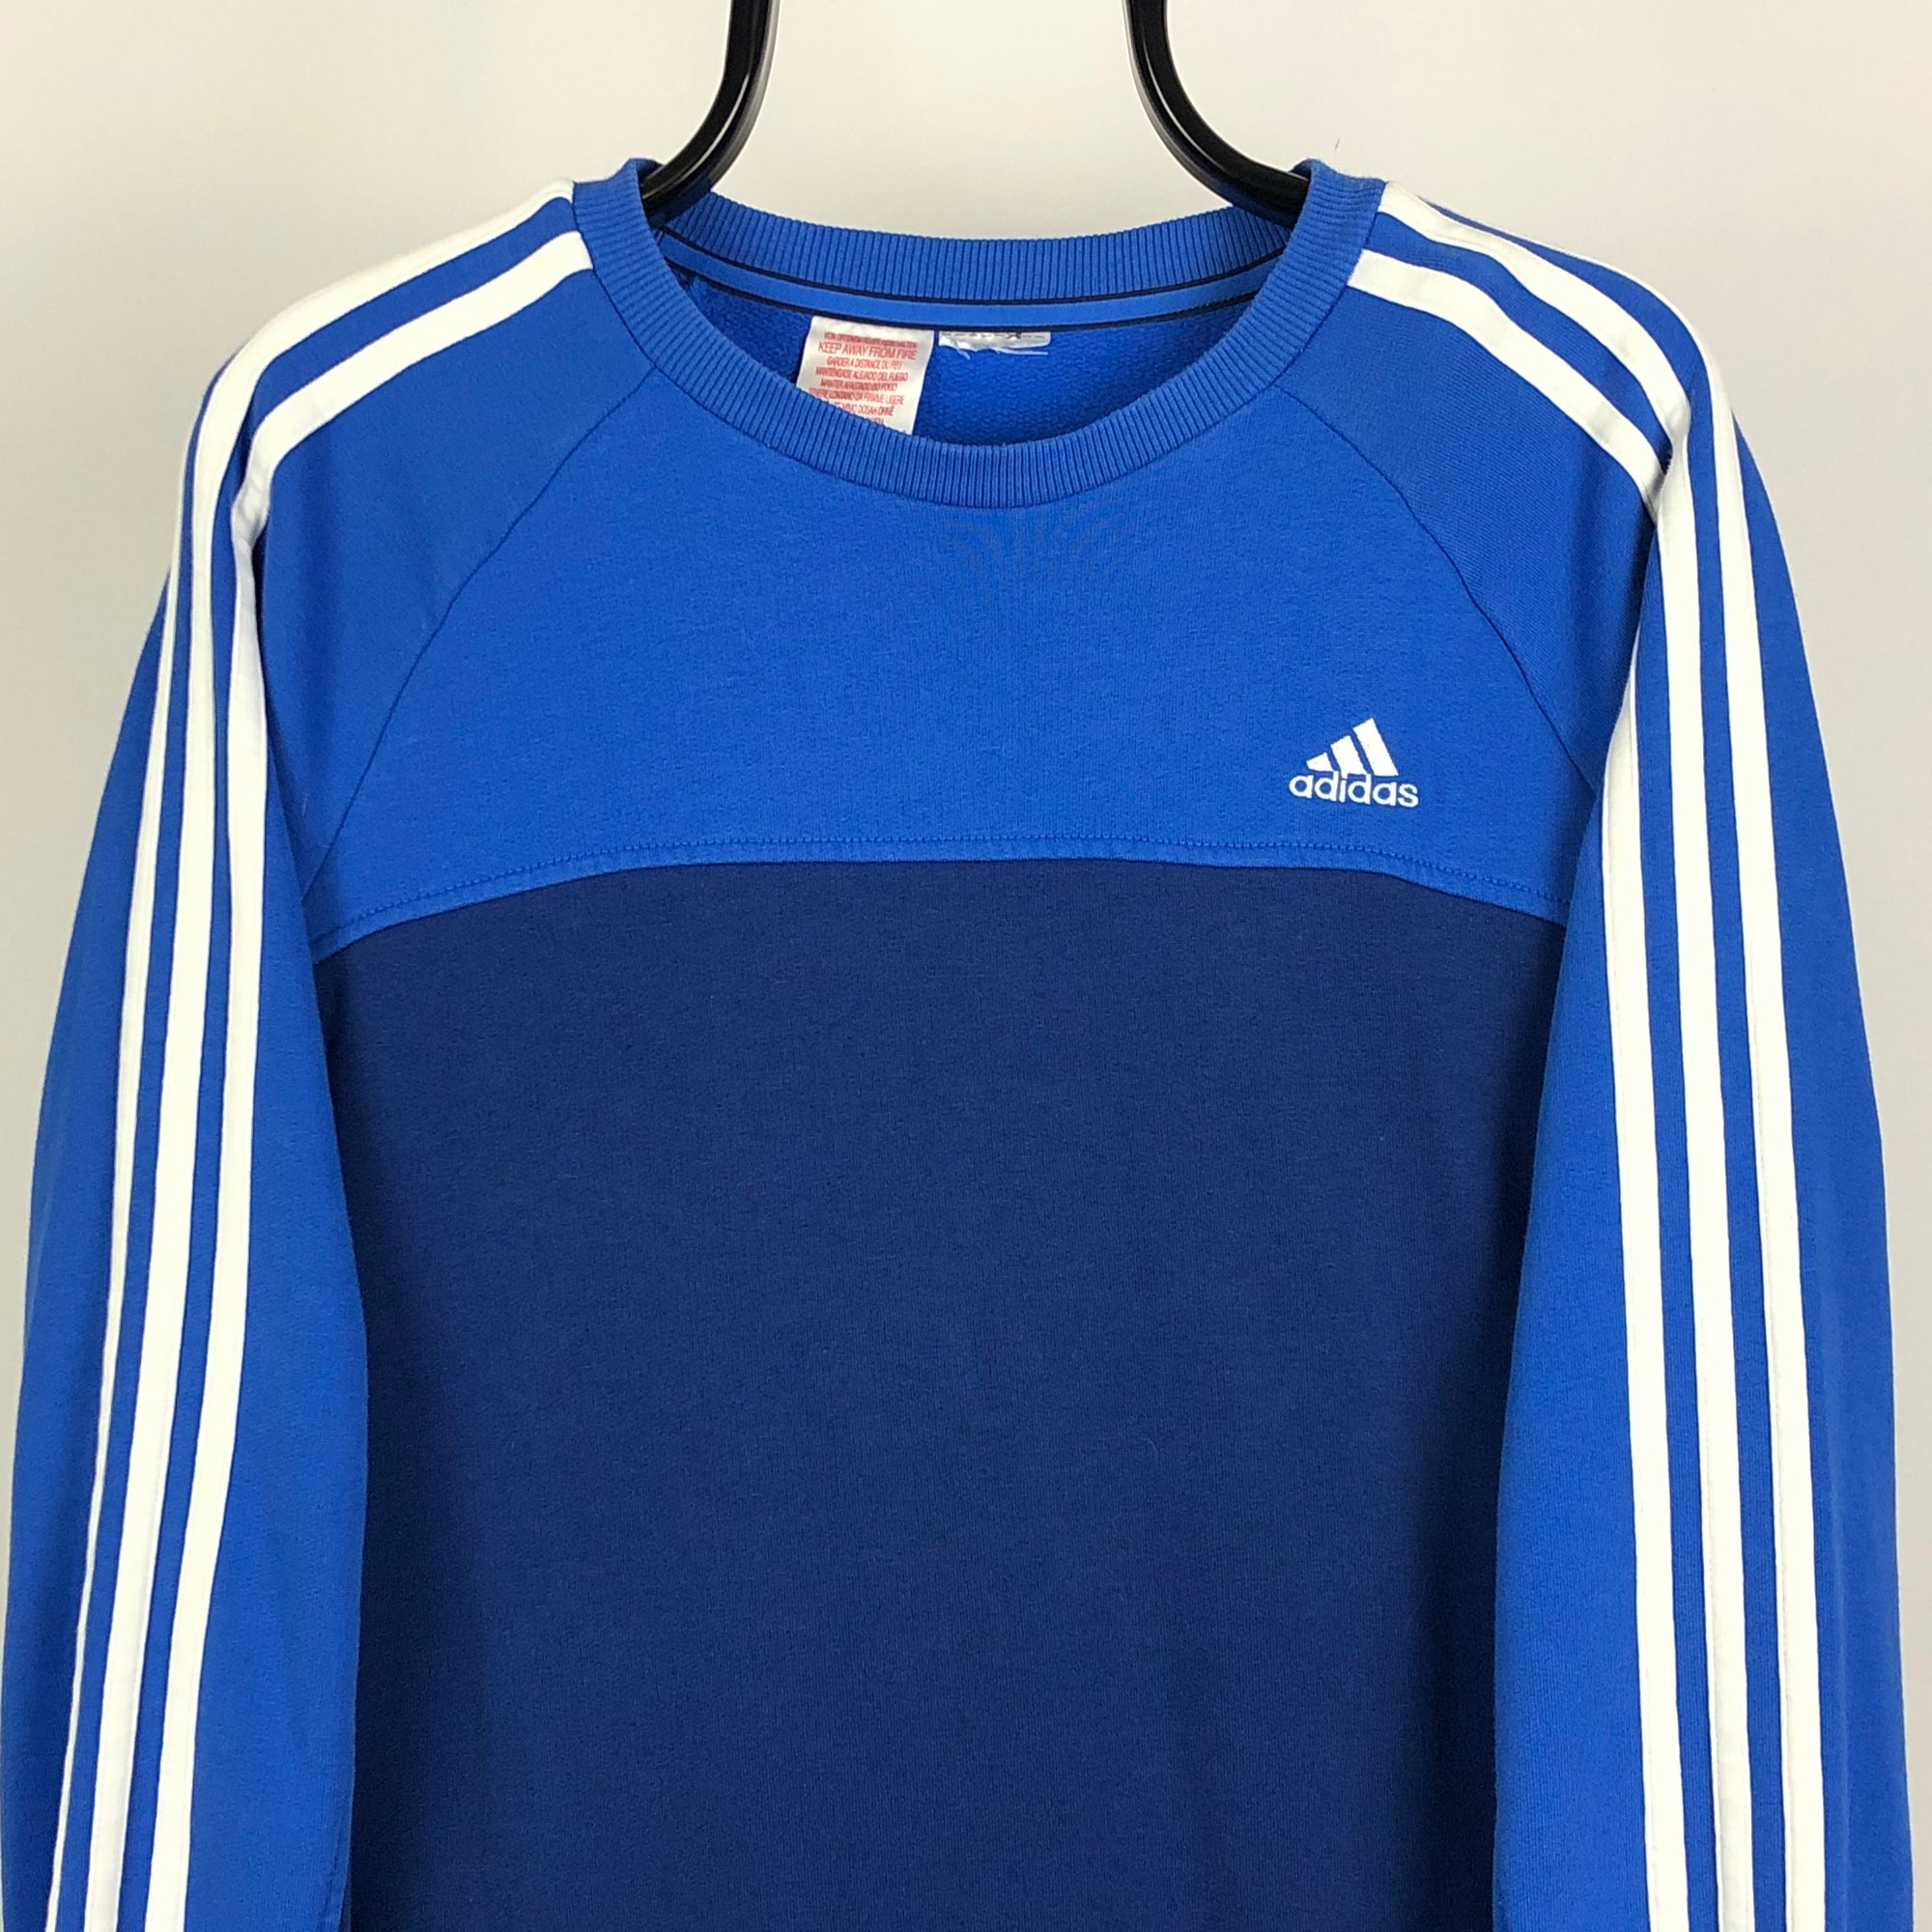 Adidas Embroidered Small Logo Sweatshirt in Blue/Navy - Men's Small/Women's Medium